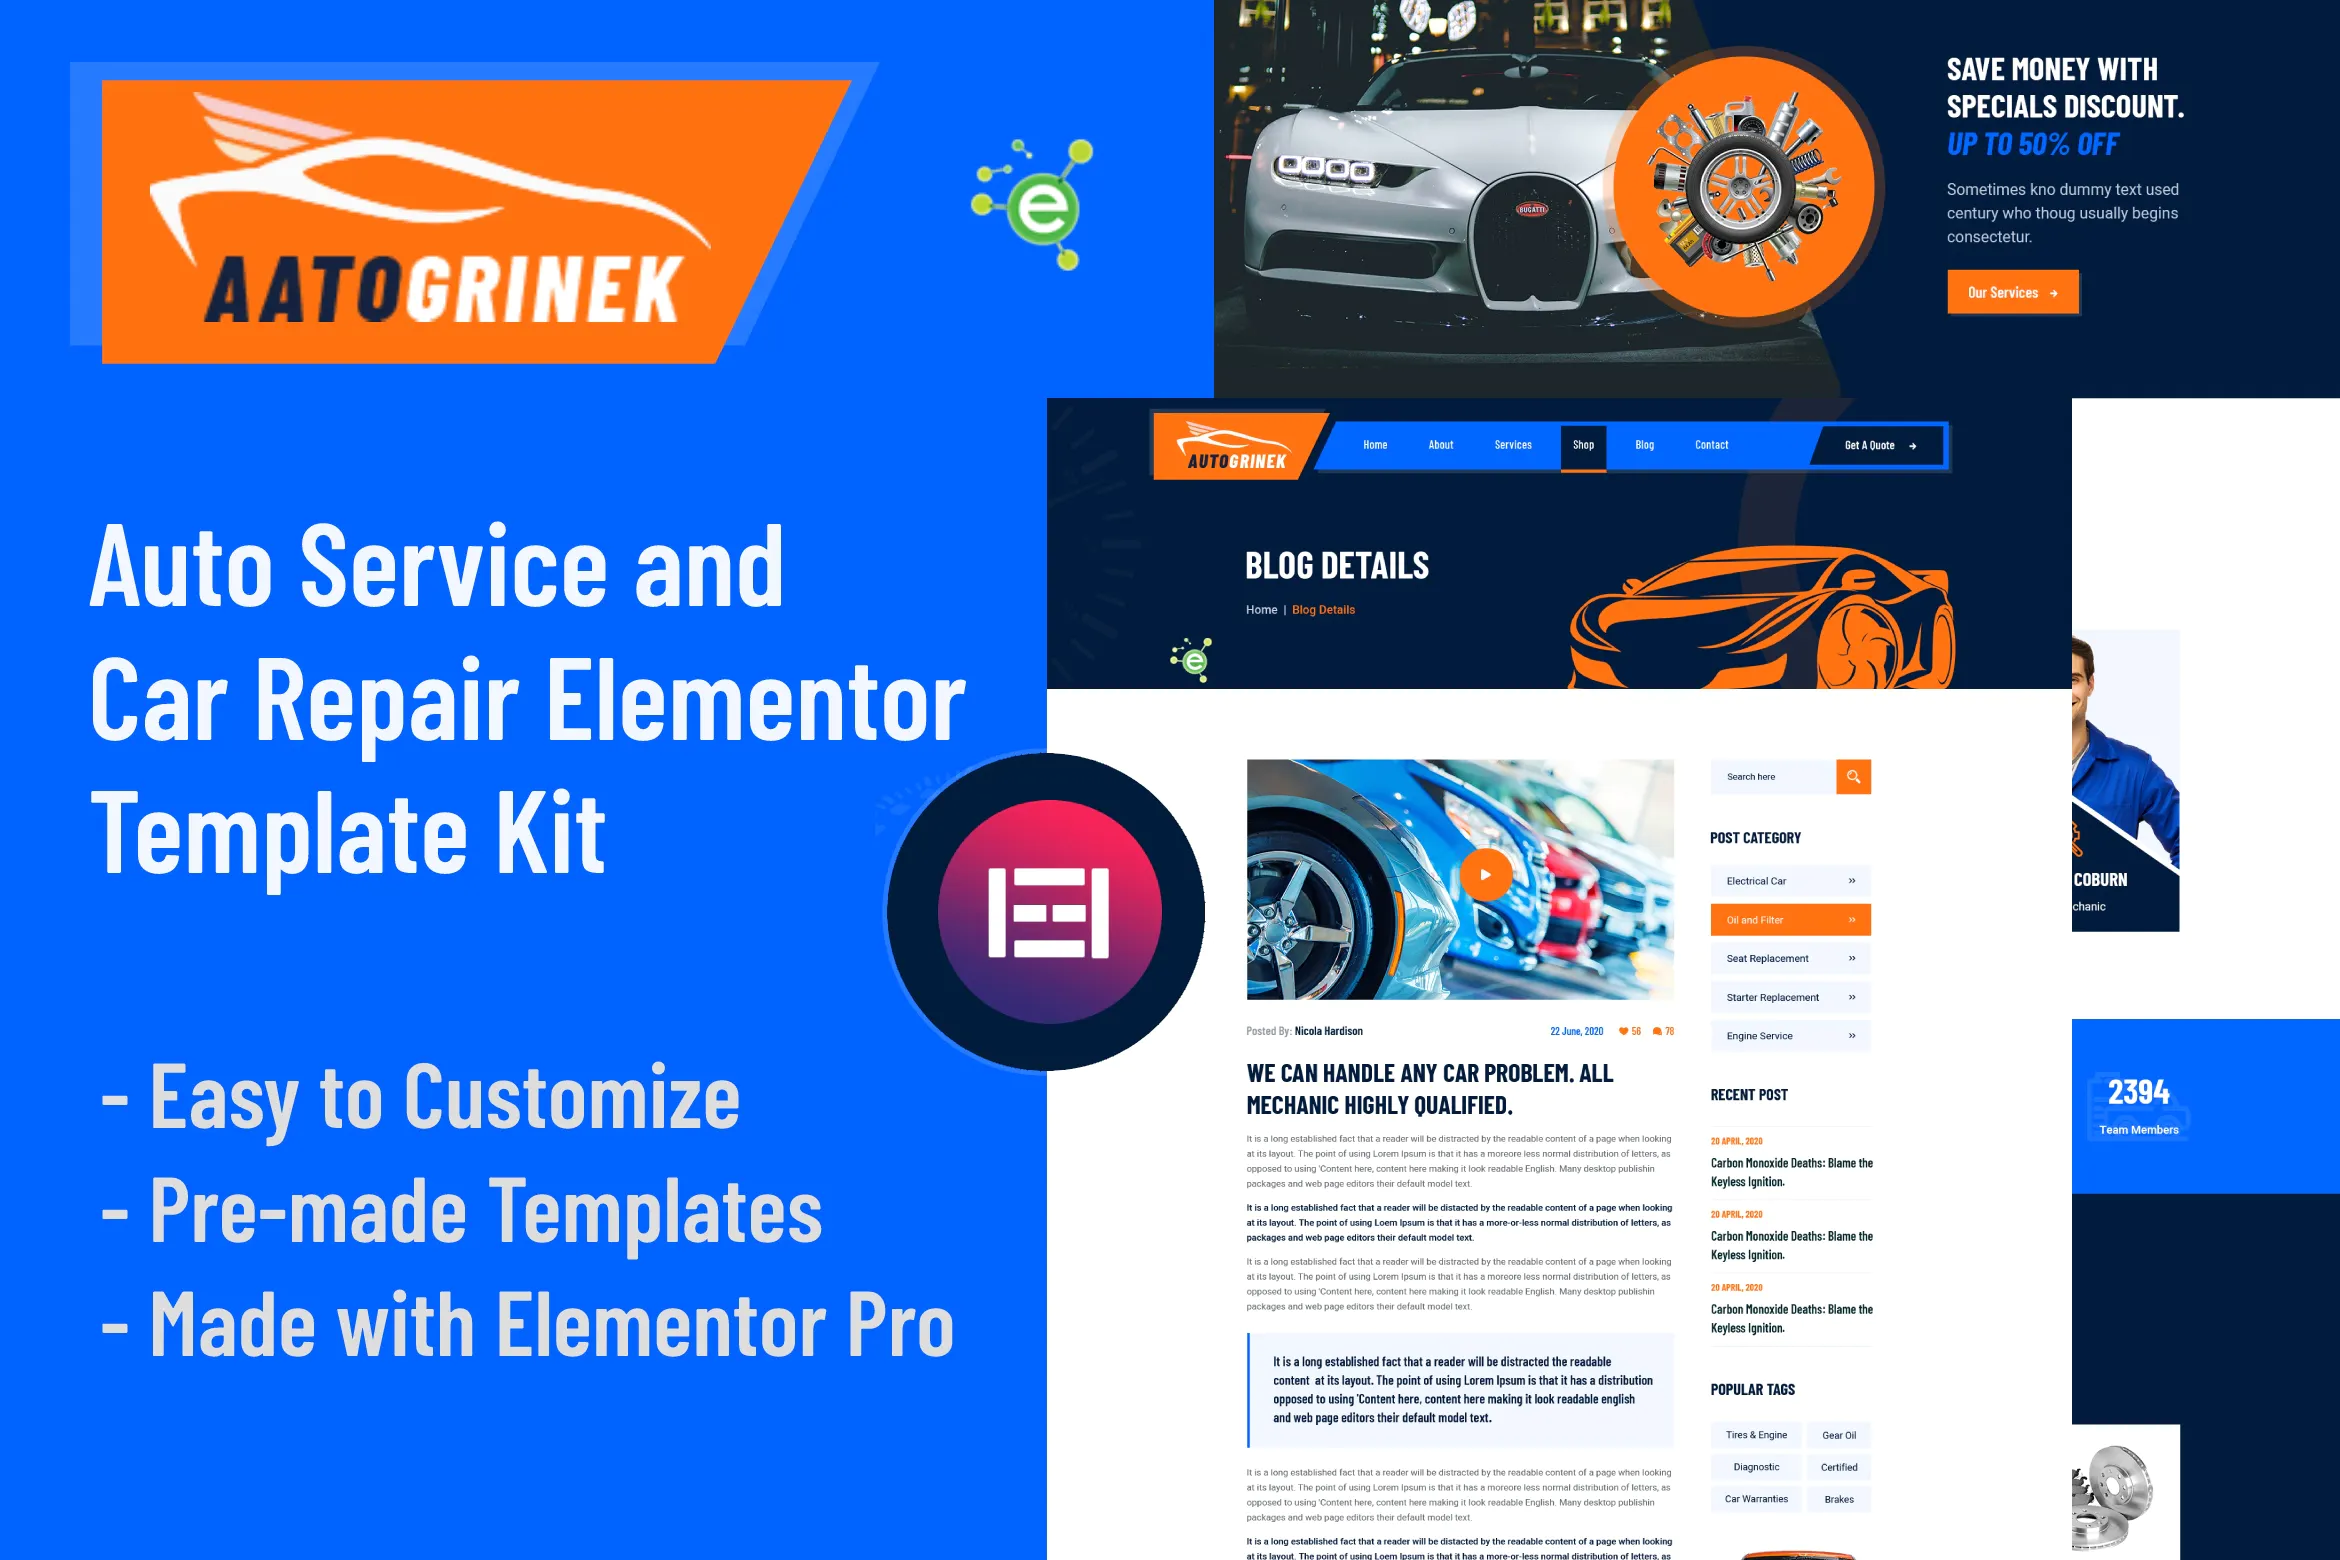 Aatogrinek - Auto Service & Car Repair Elementor Template Kit插图